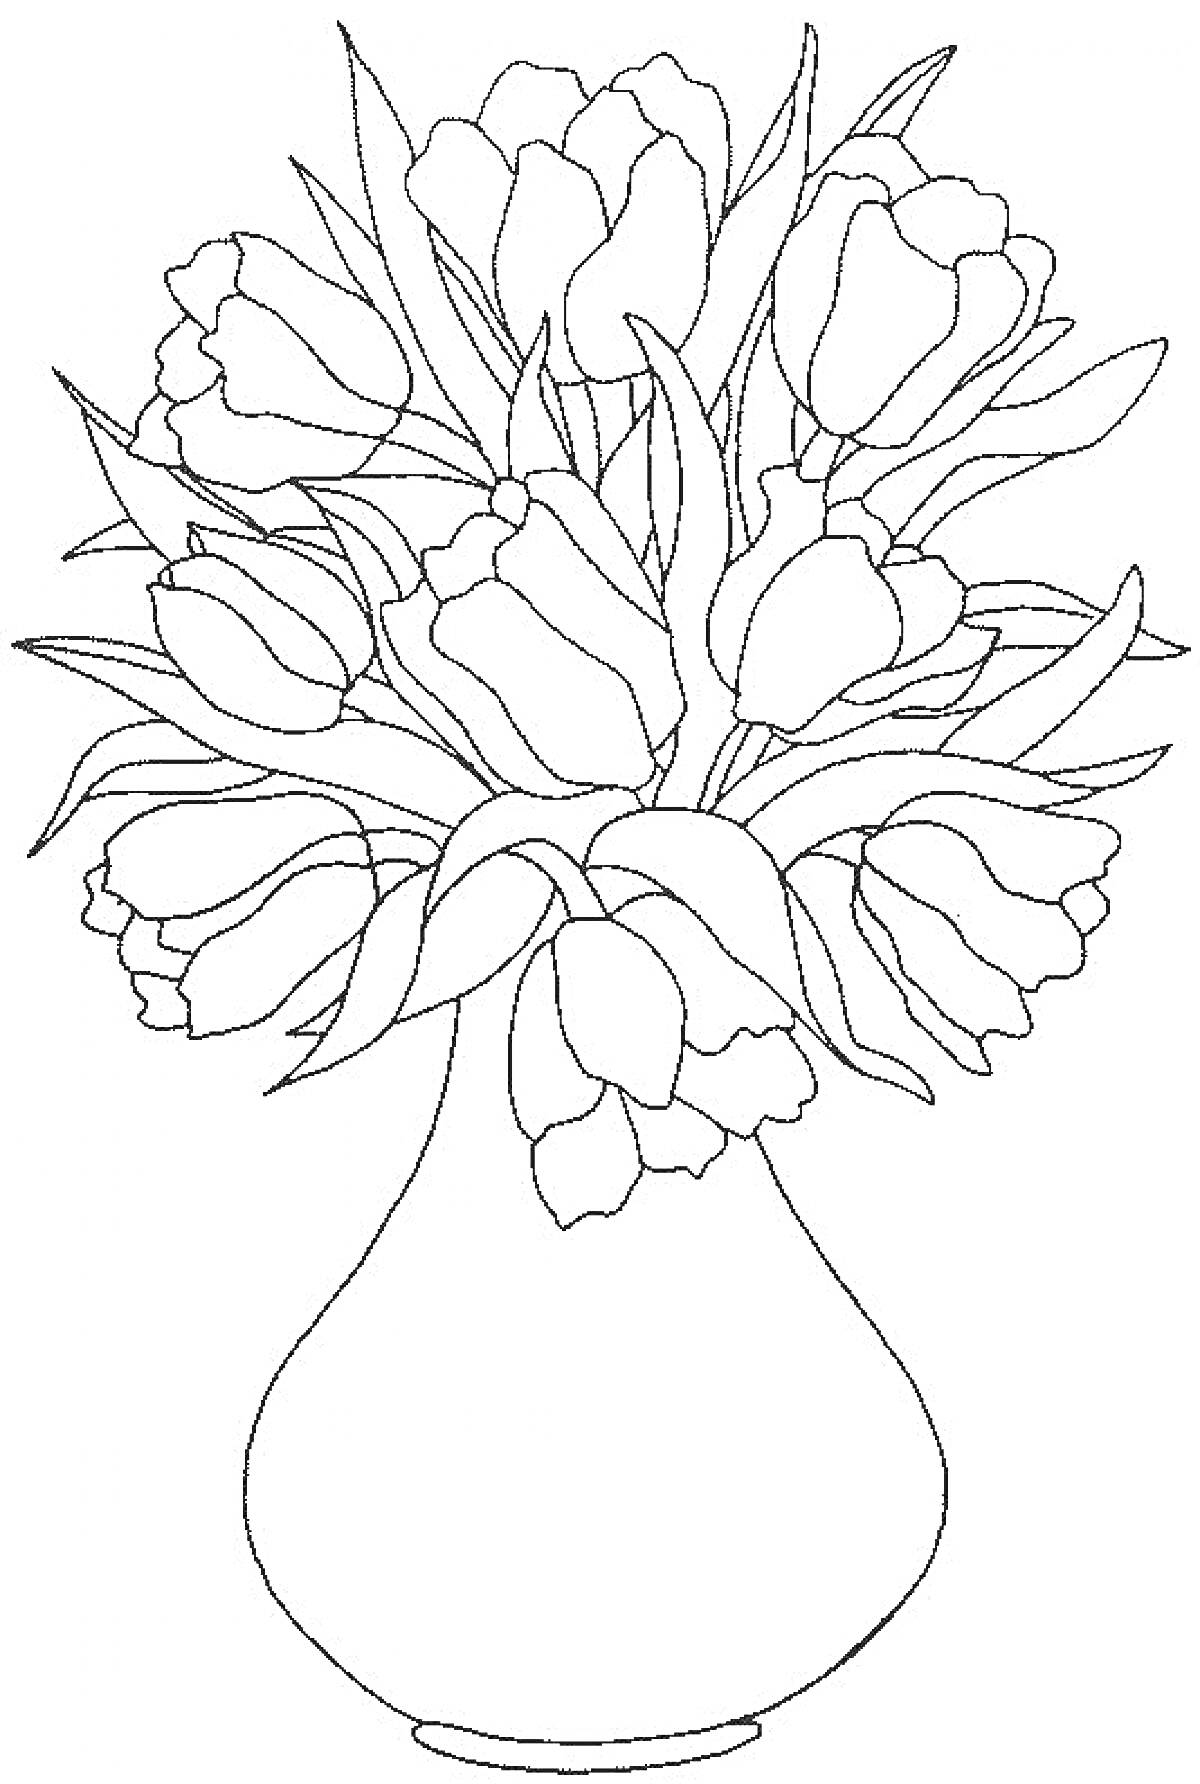 Раскраска Ваза с тюльпанами (Тюльпаны в вазе, букет)